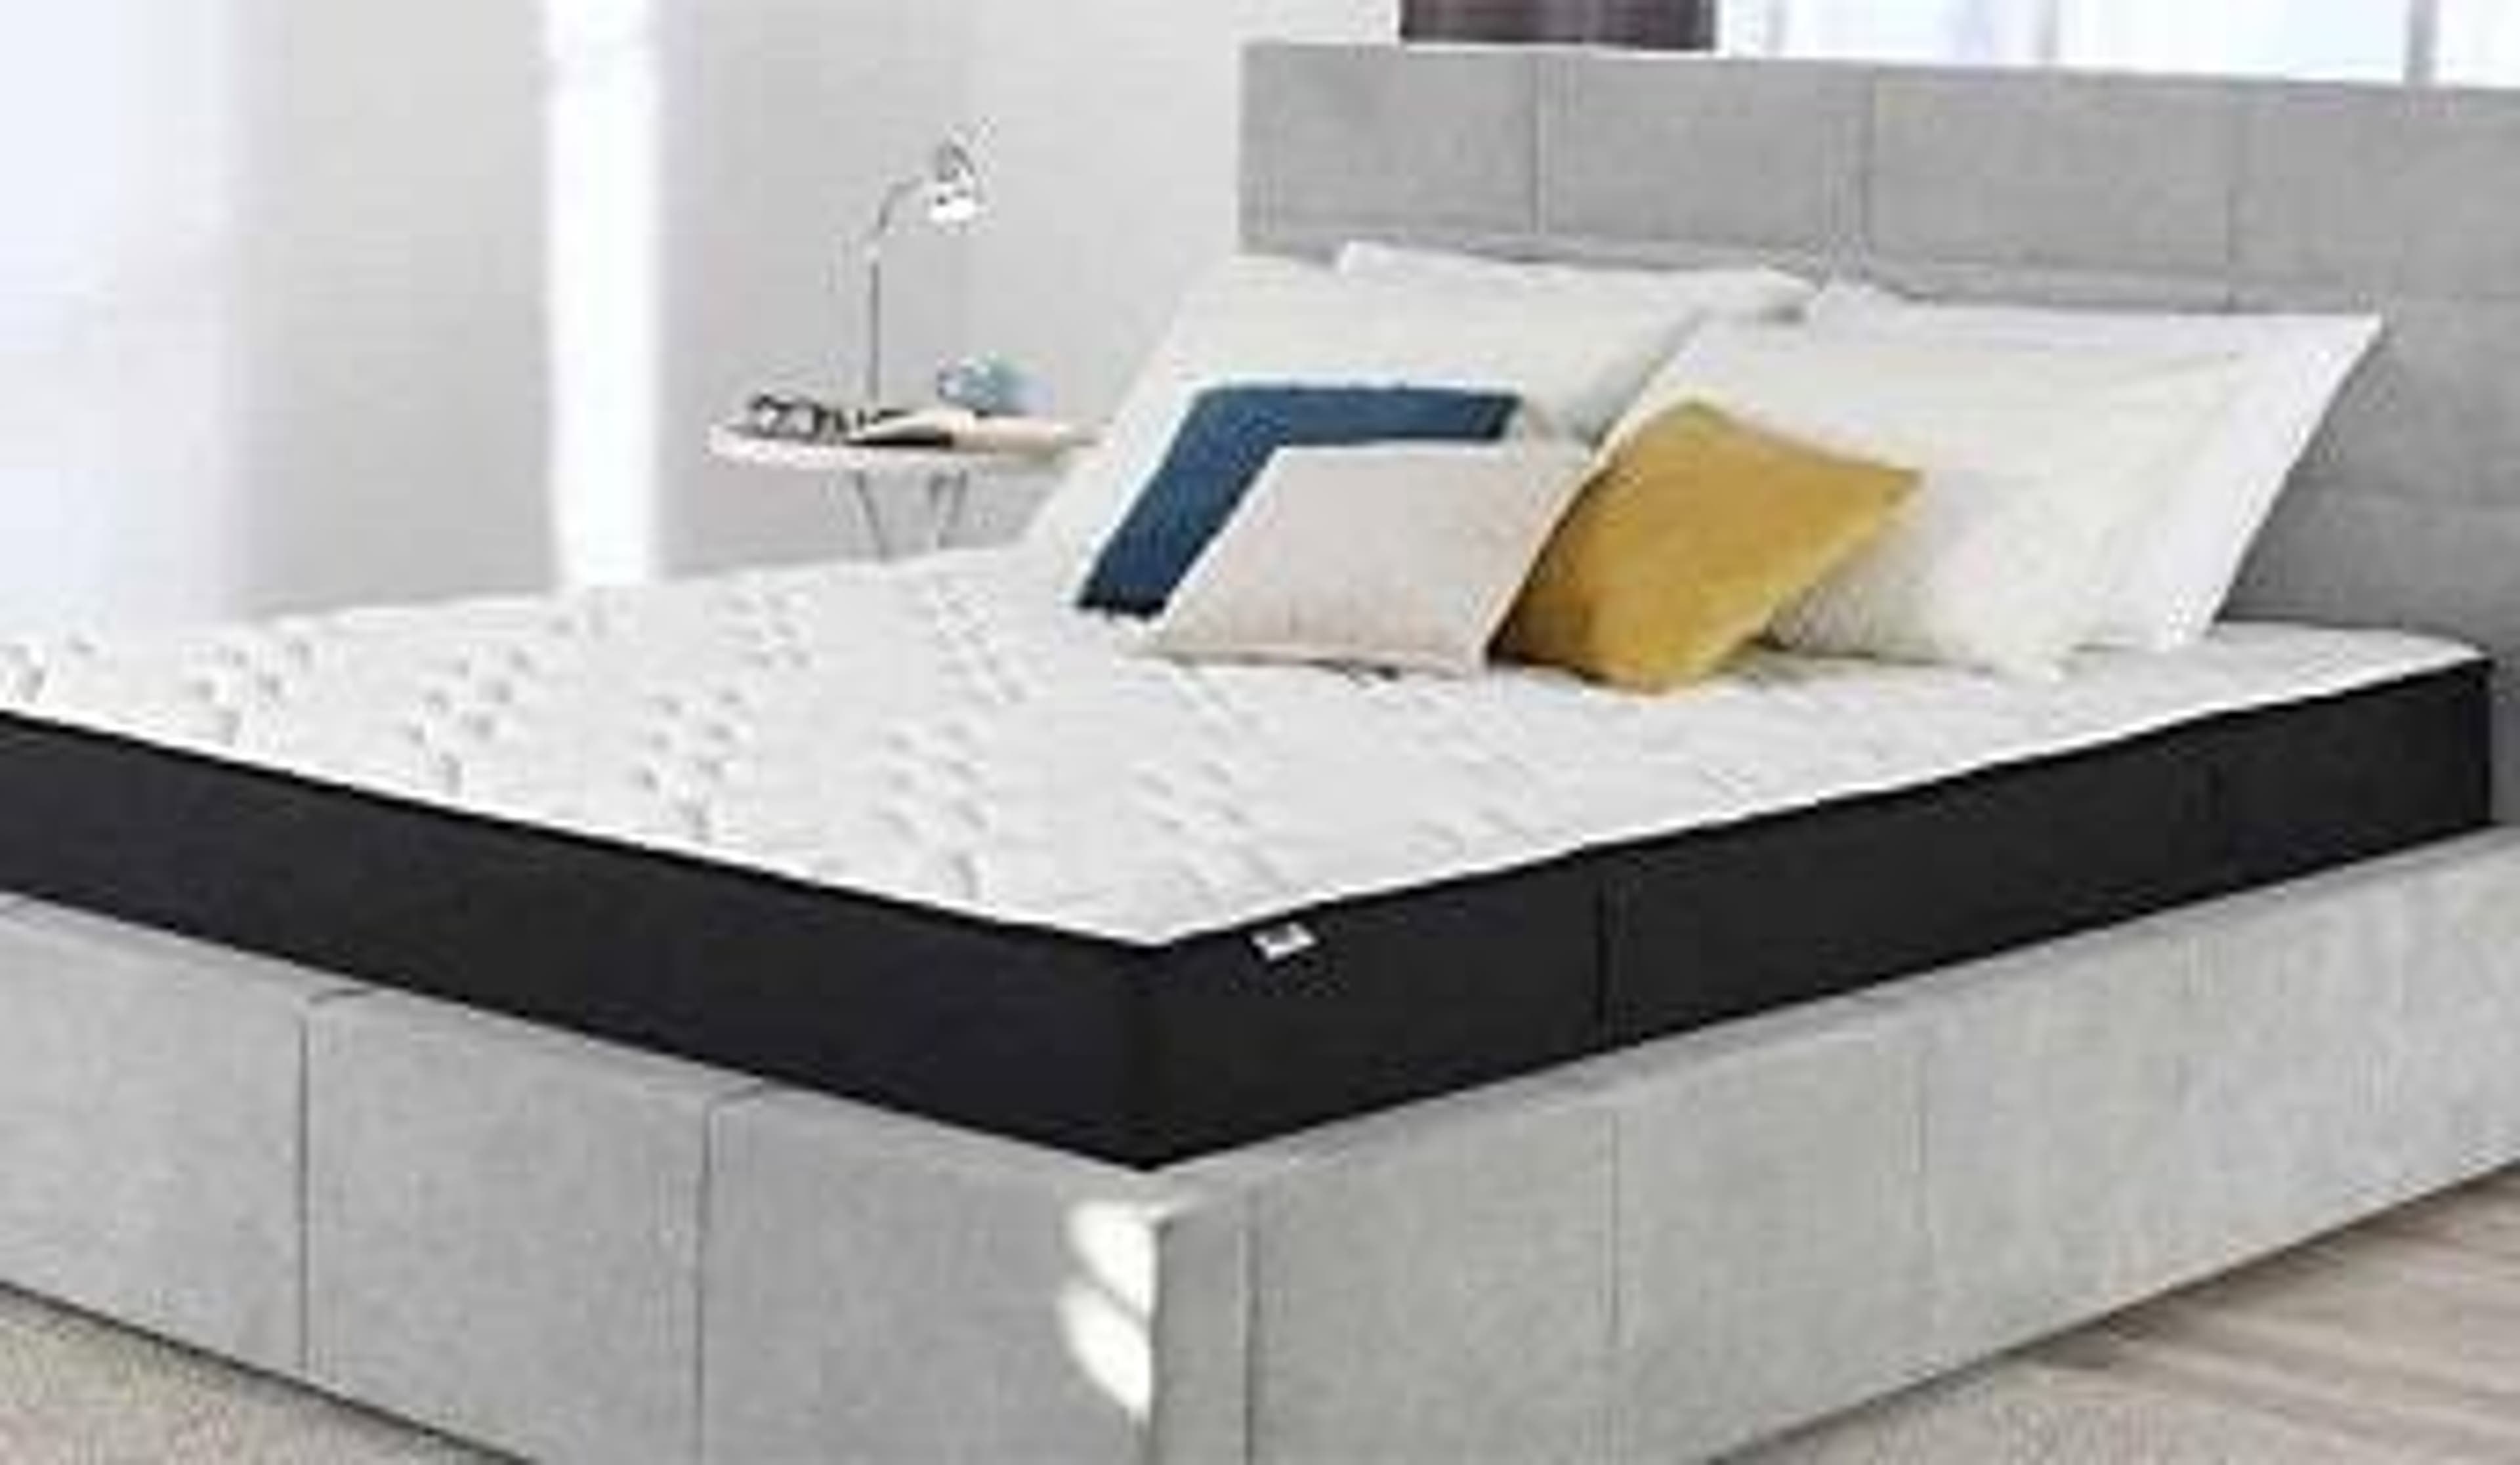  A Dormeo mattress on a grey bedframe 